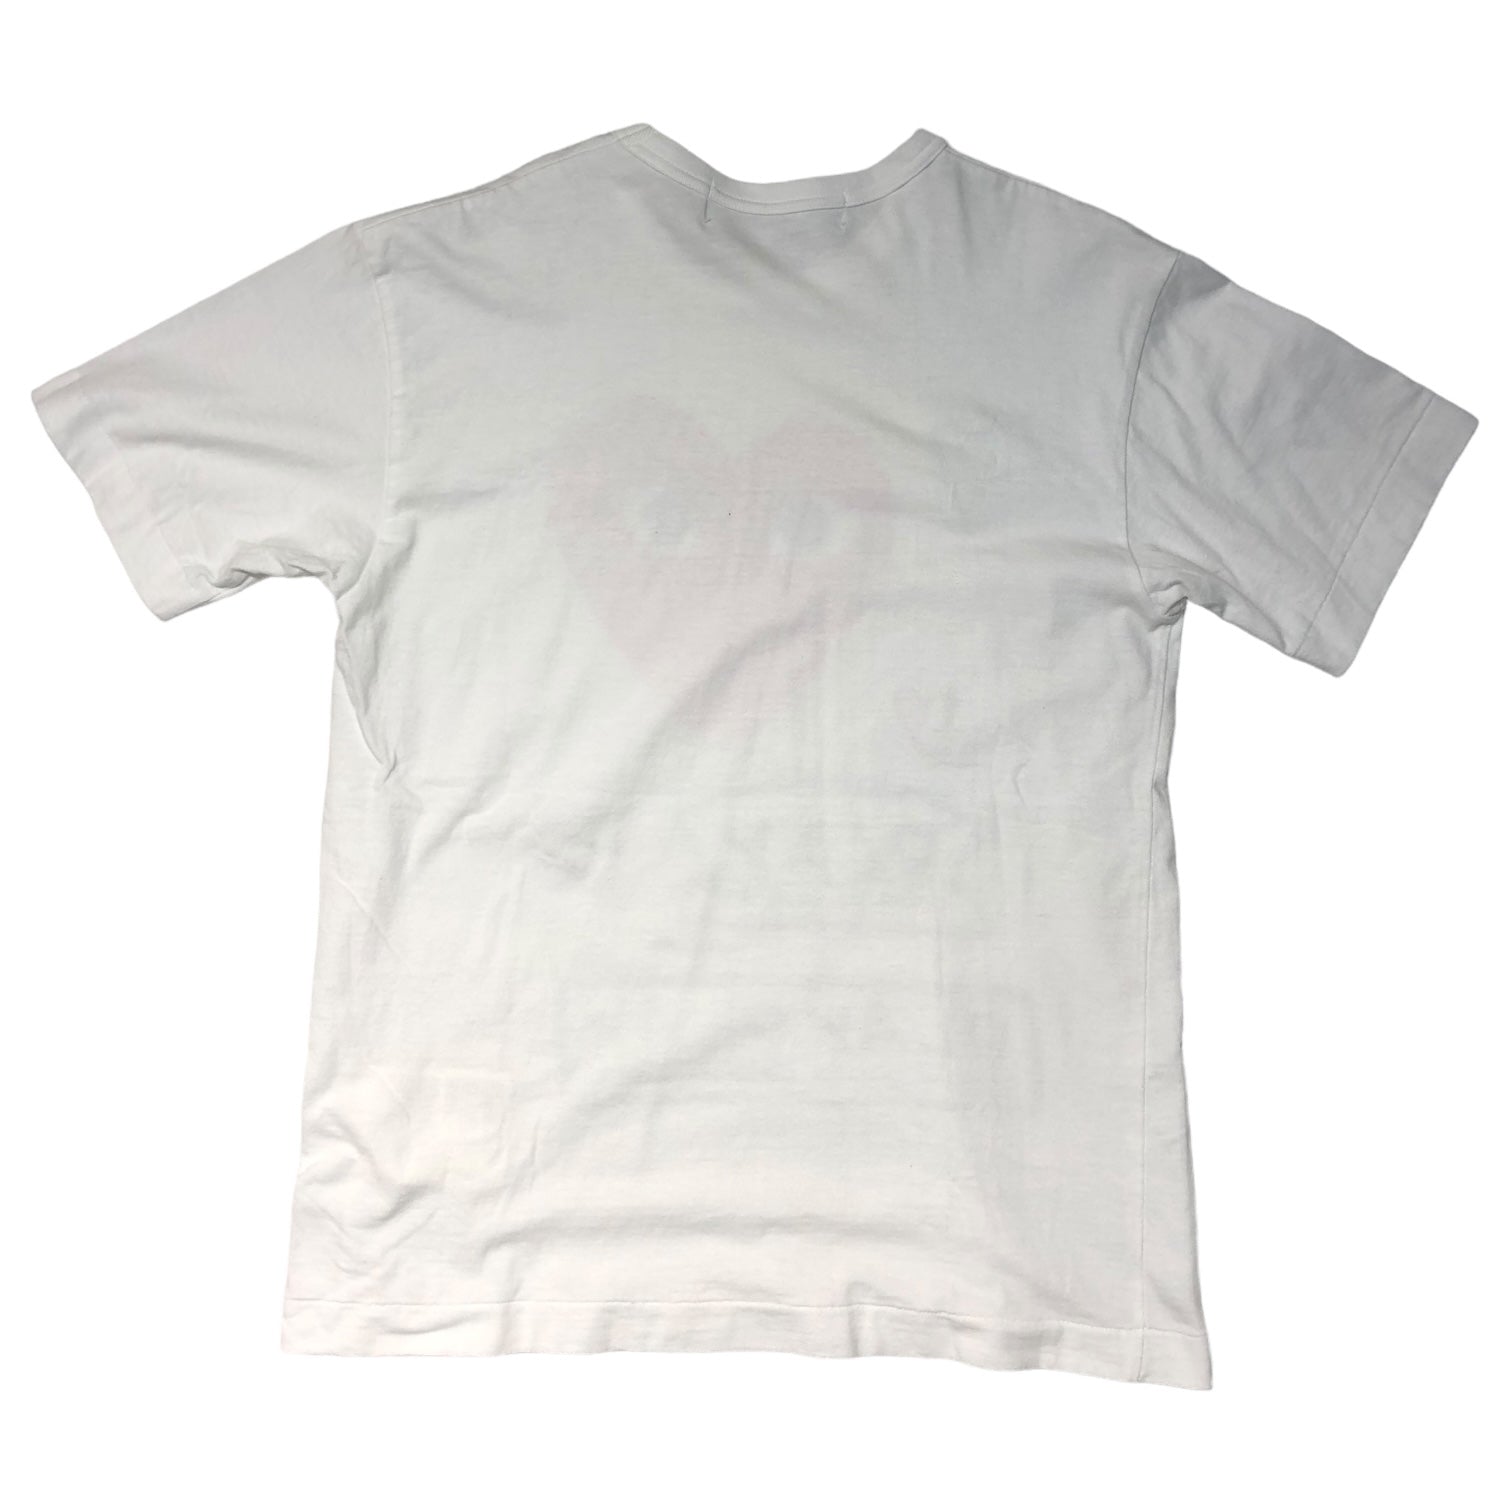 PLAY COMME des GARCONS(プレイコムデギャルソン) Multiple Heart Printed S/S T-Shirt ハート ロゴ 半袖 Tシャツ AZ-T280 M ホワイト AD2020/9